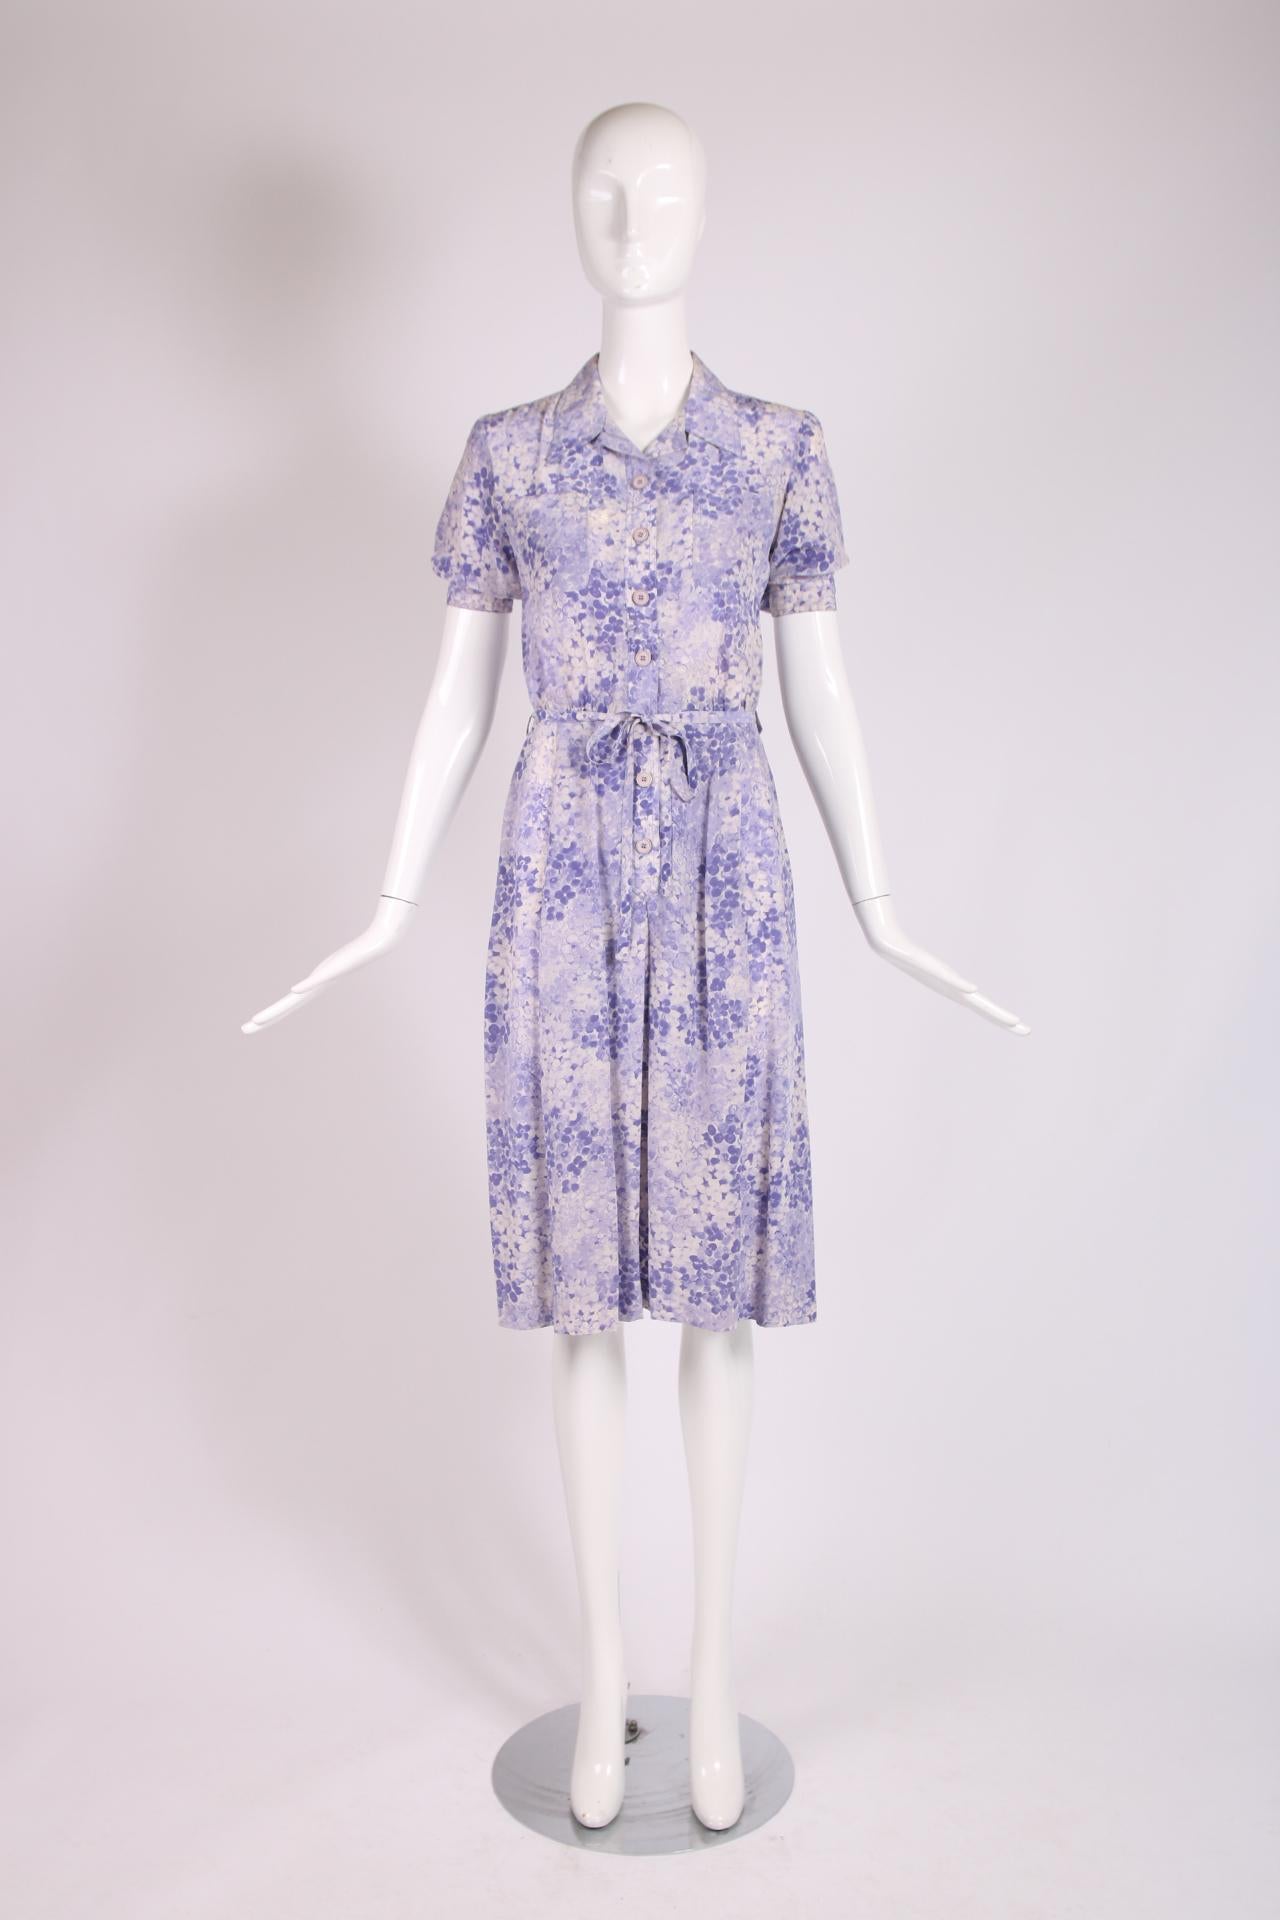 Yves Saint Laurent Lila Floral Seide Tag Kleid 1970's (Violett) im Angebot